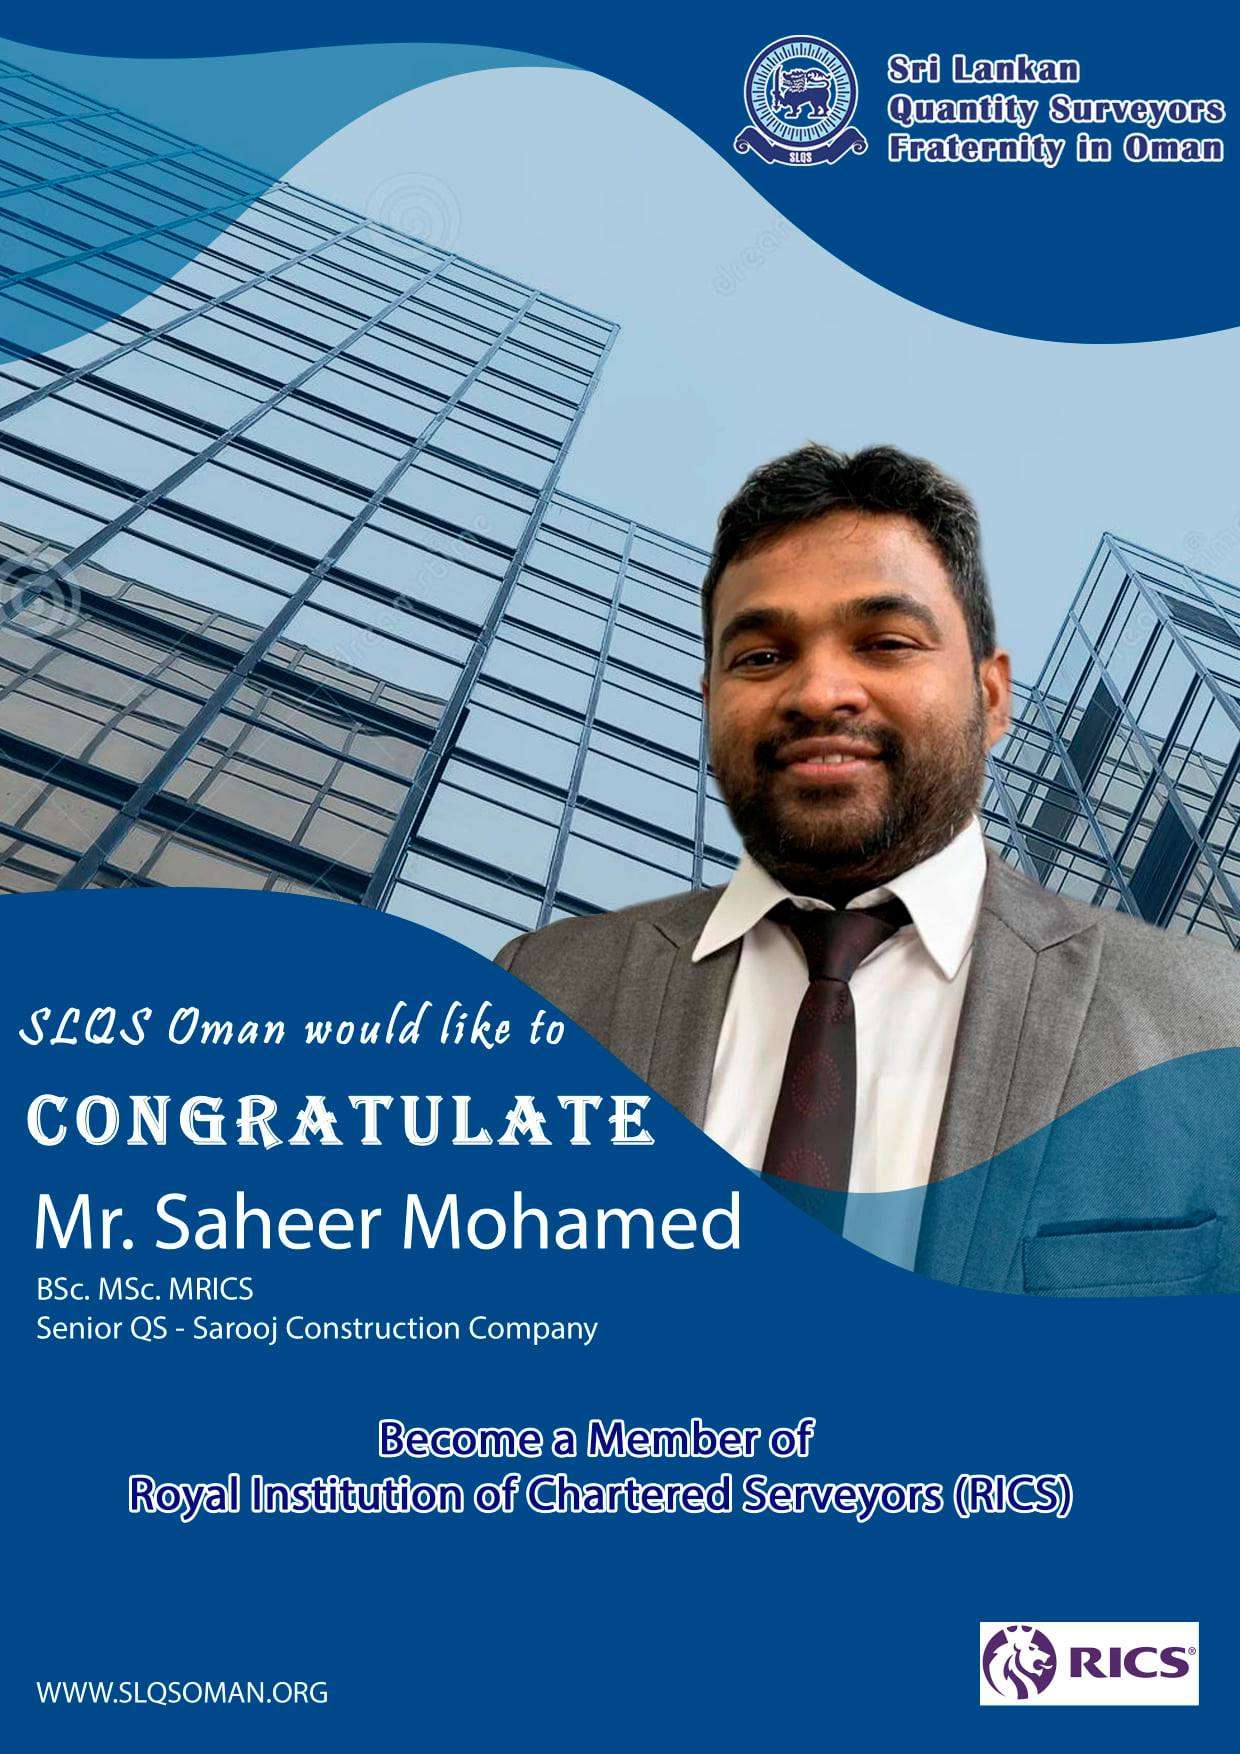 Congratulations Mr Saheer Mohamed !! For achieving member of RICS